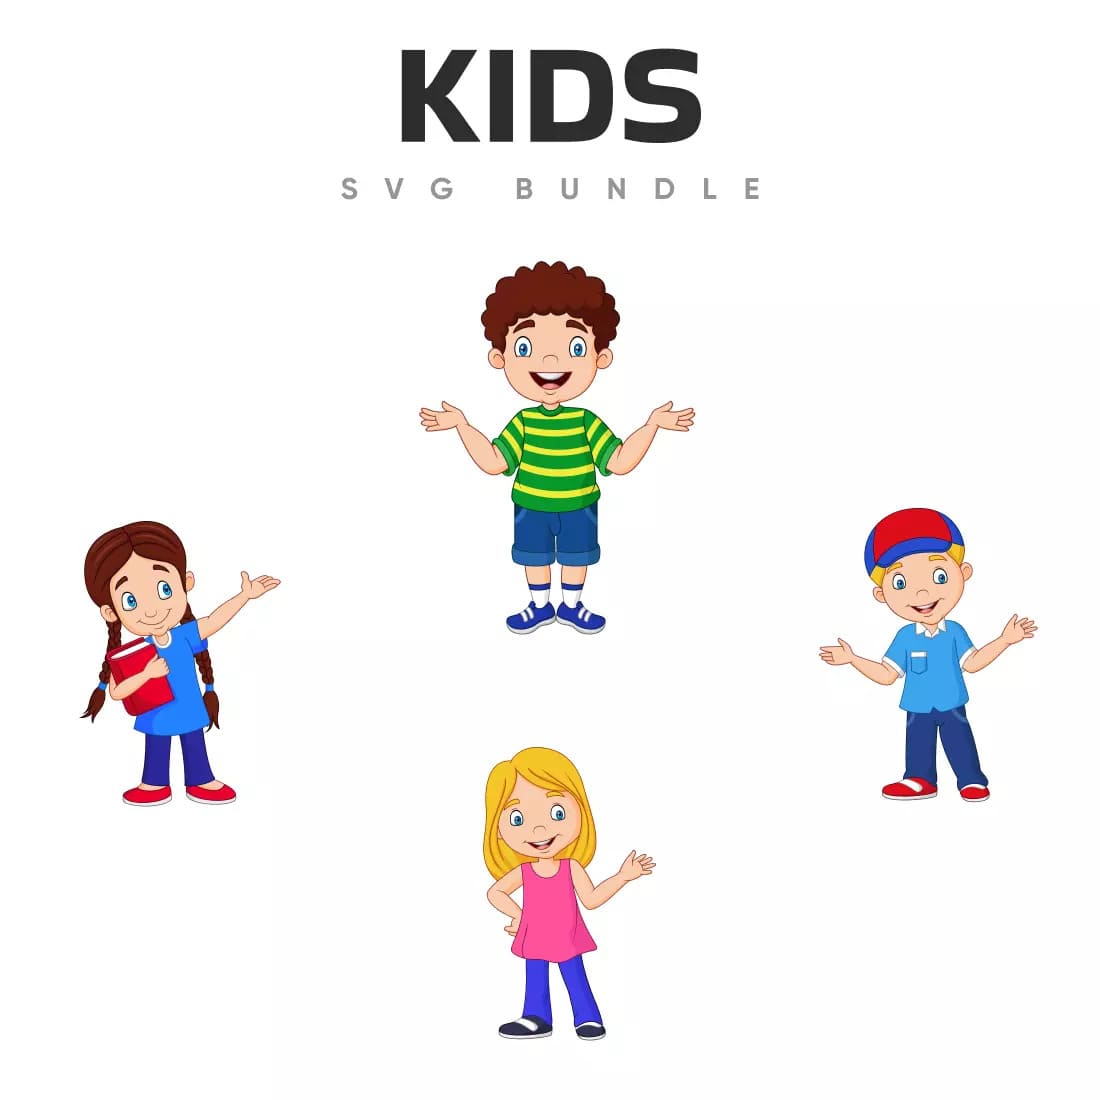 Kids SVG Bundle Preview 8.